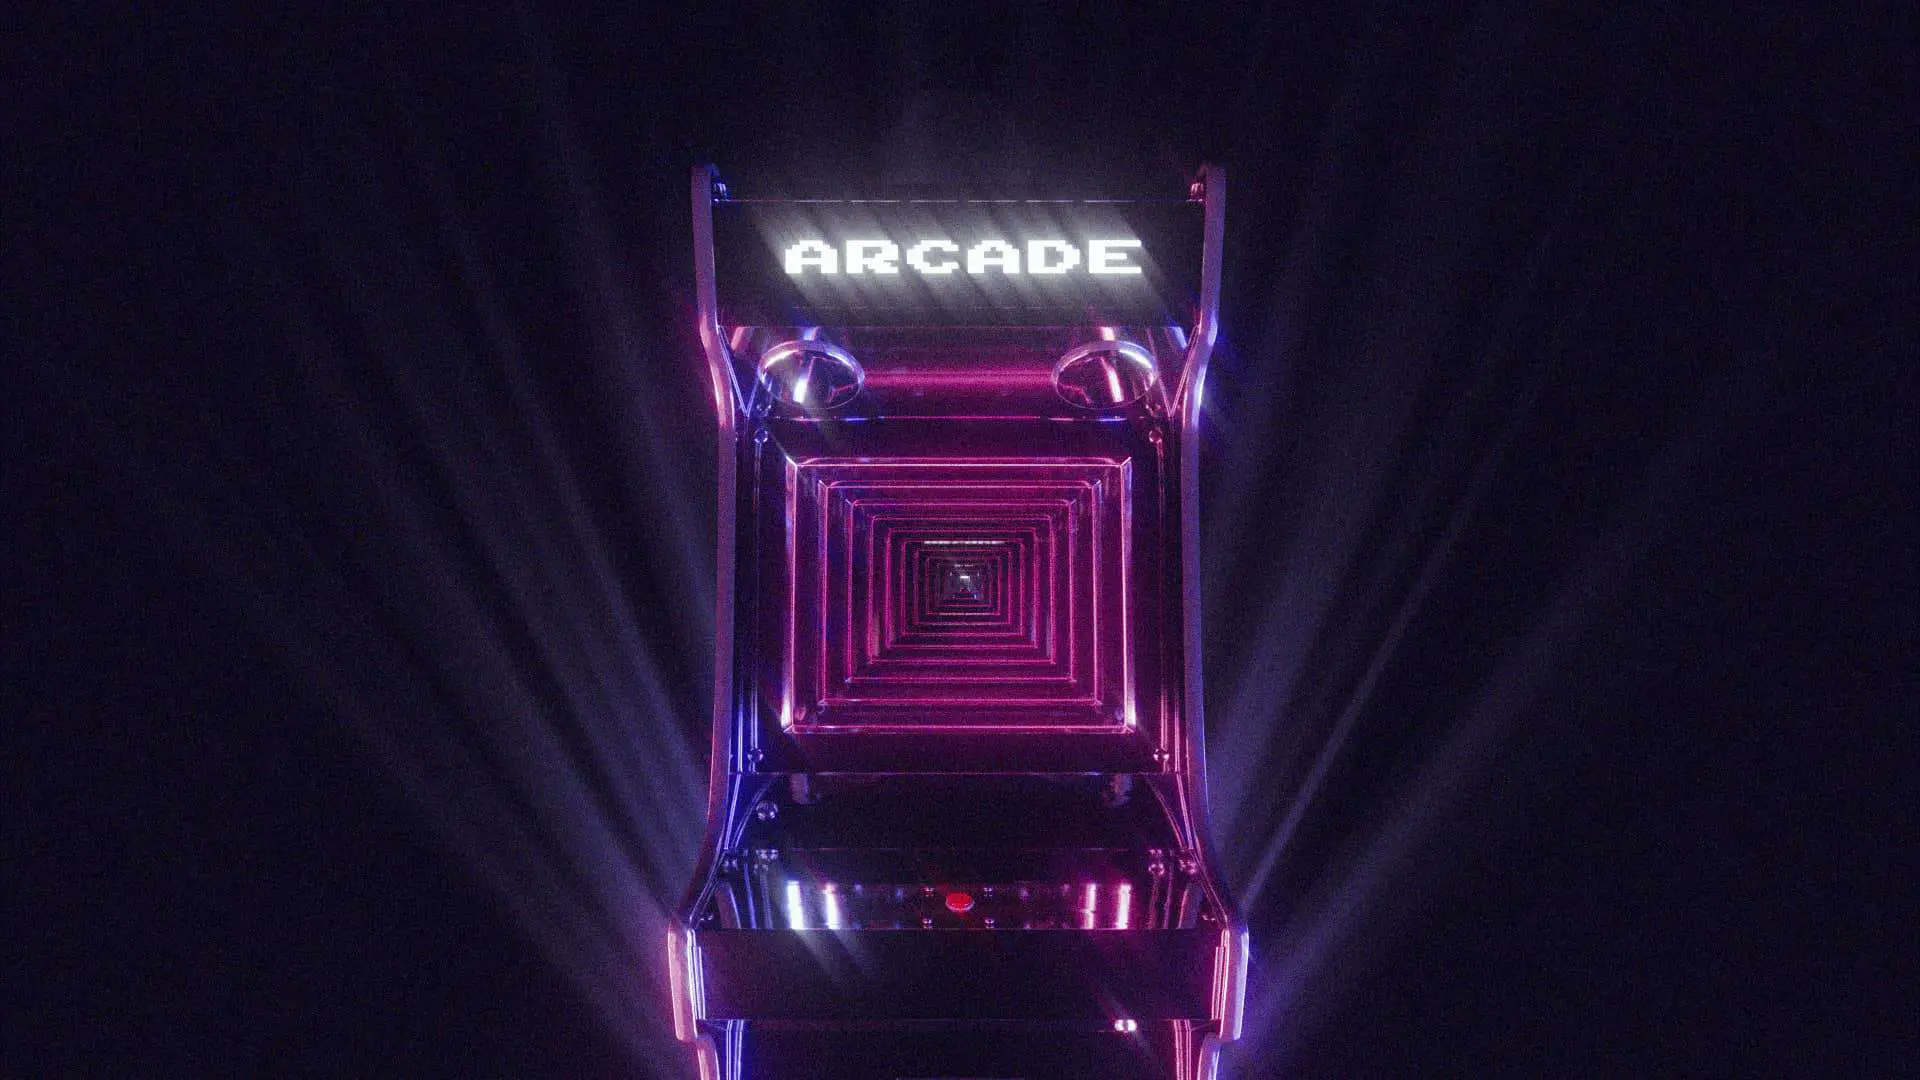 Arcade video game image